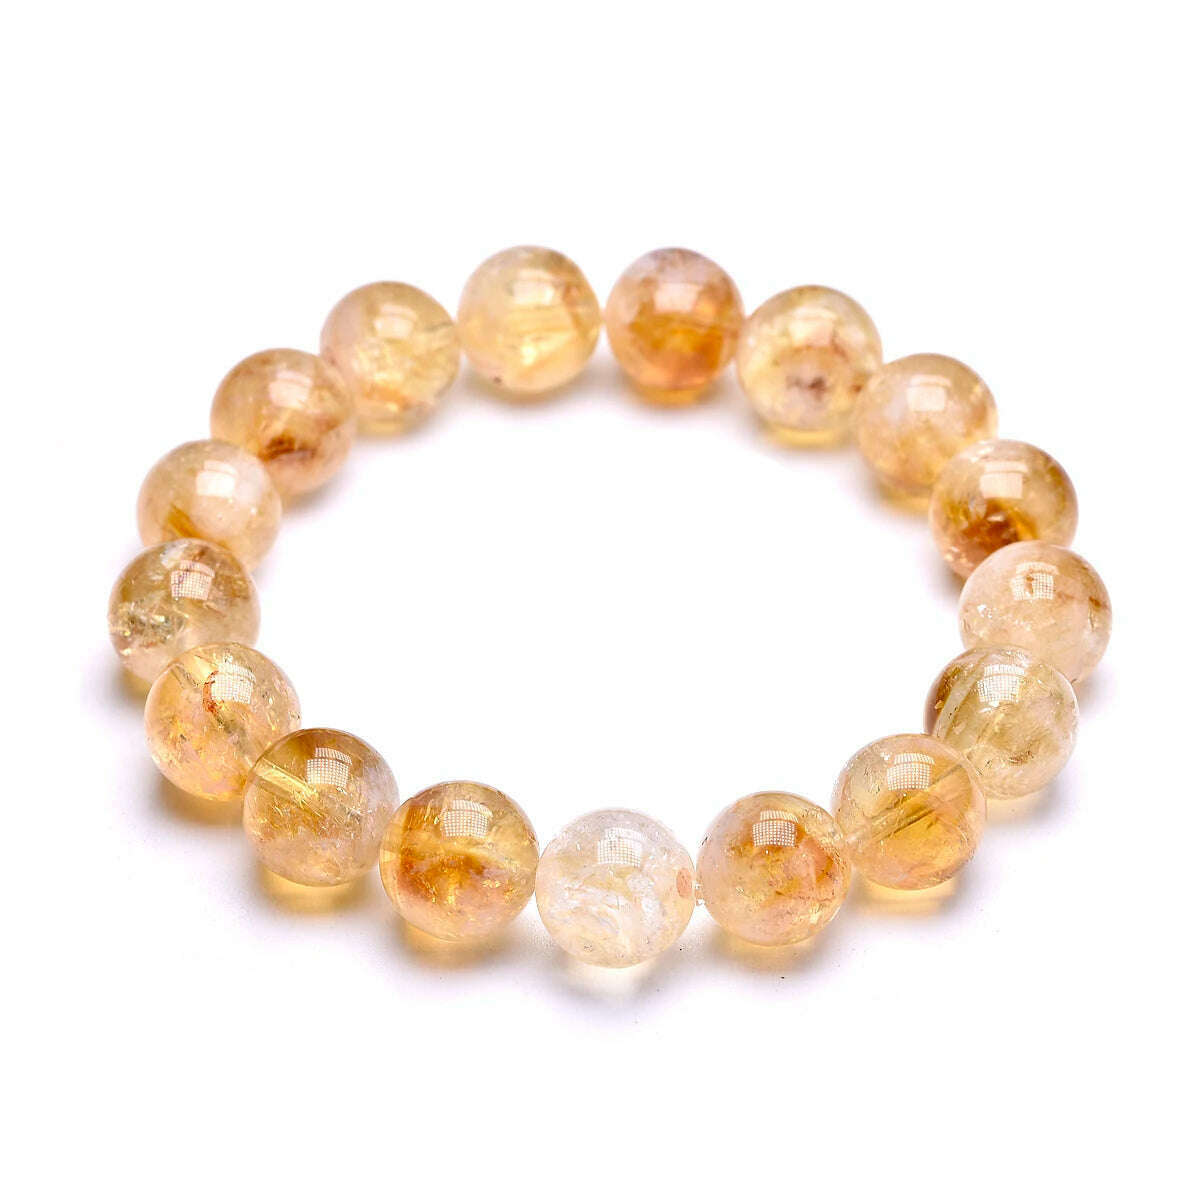 KIMLUD, 3A Natural Reiki Healing Energy Yelllow Citrine Quartz Chakra Meditation Degausst Beads Bracelets For Women Men Lucky Jewelry, Beads 12mm / 16cm, KIMLUD Women's Clothes